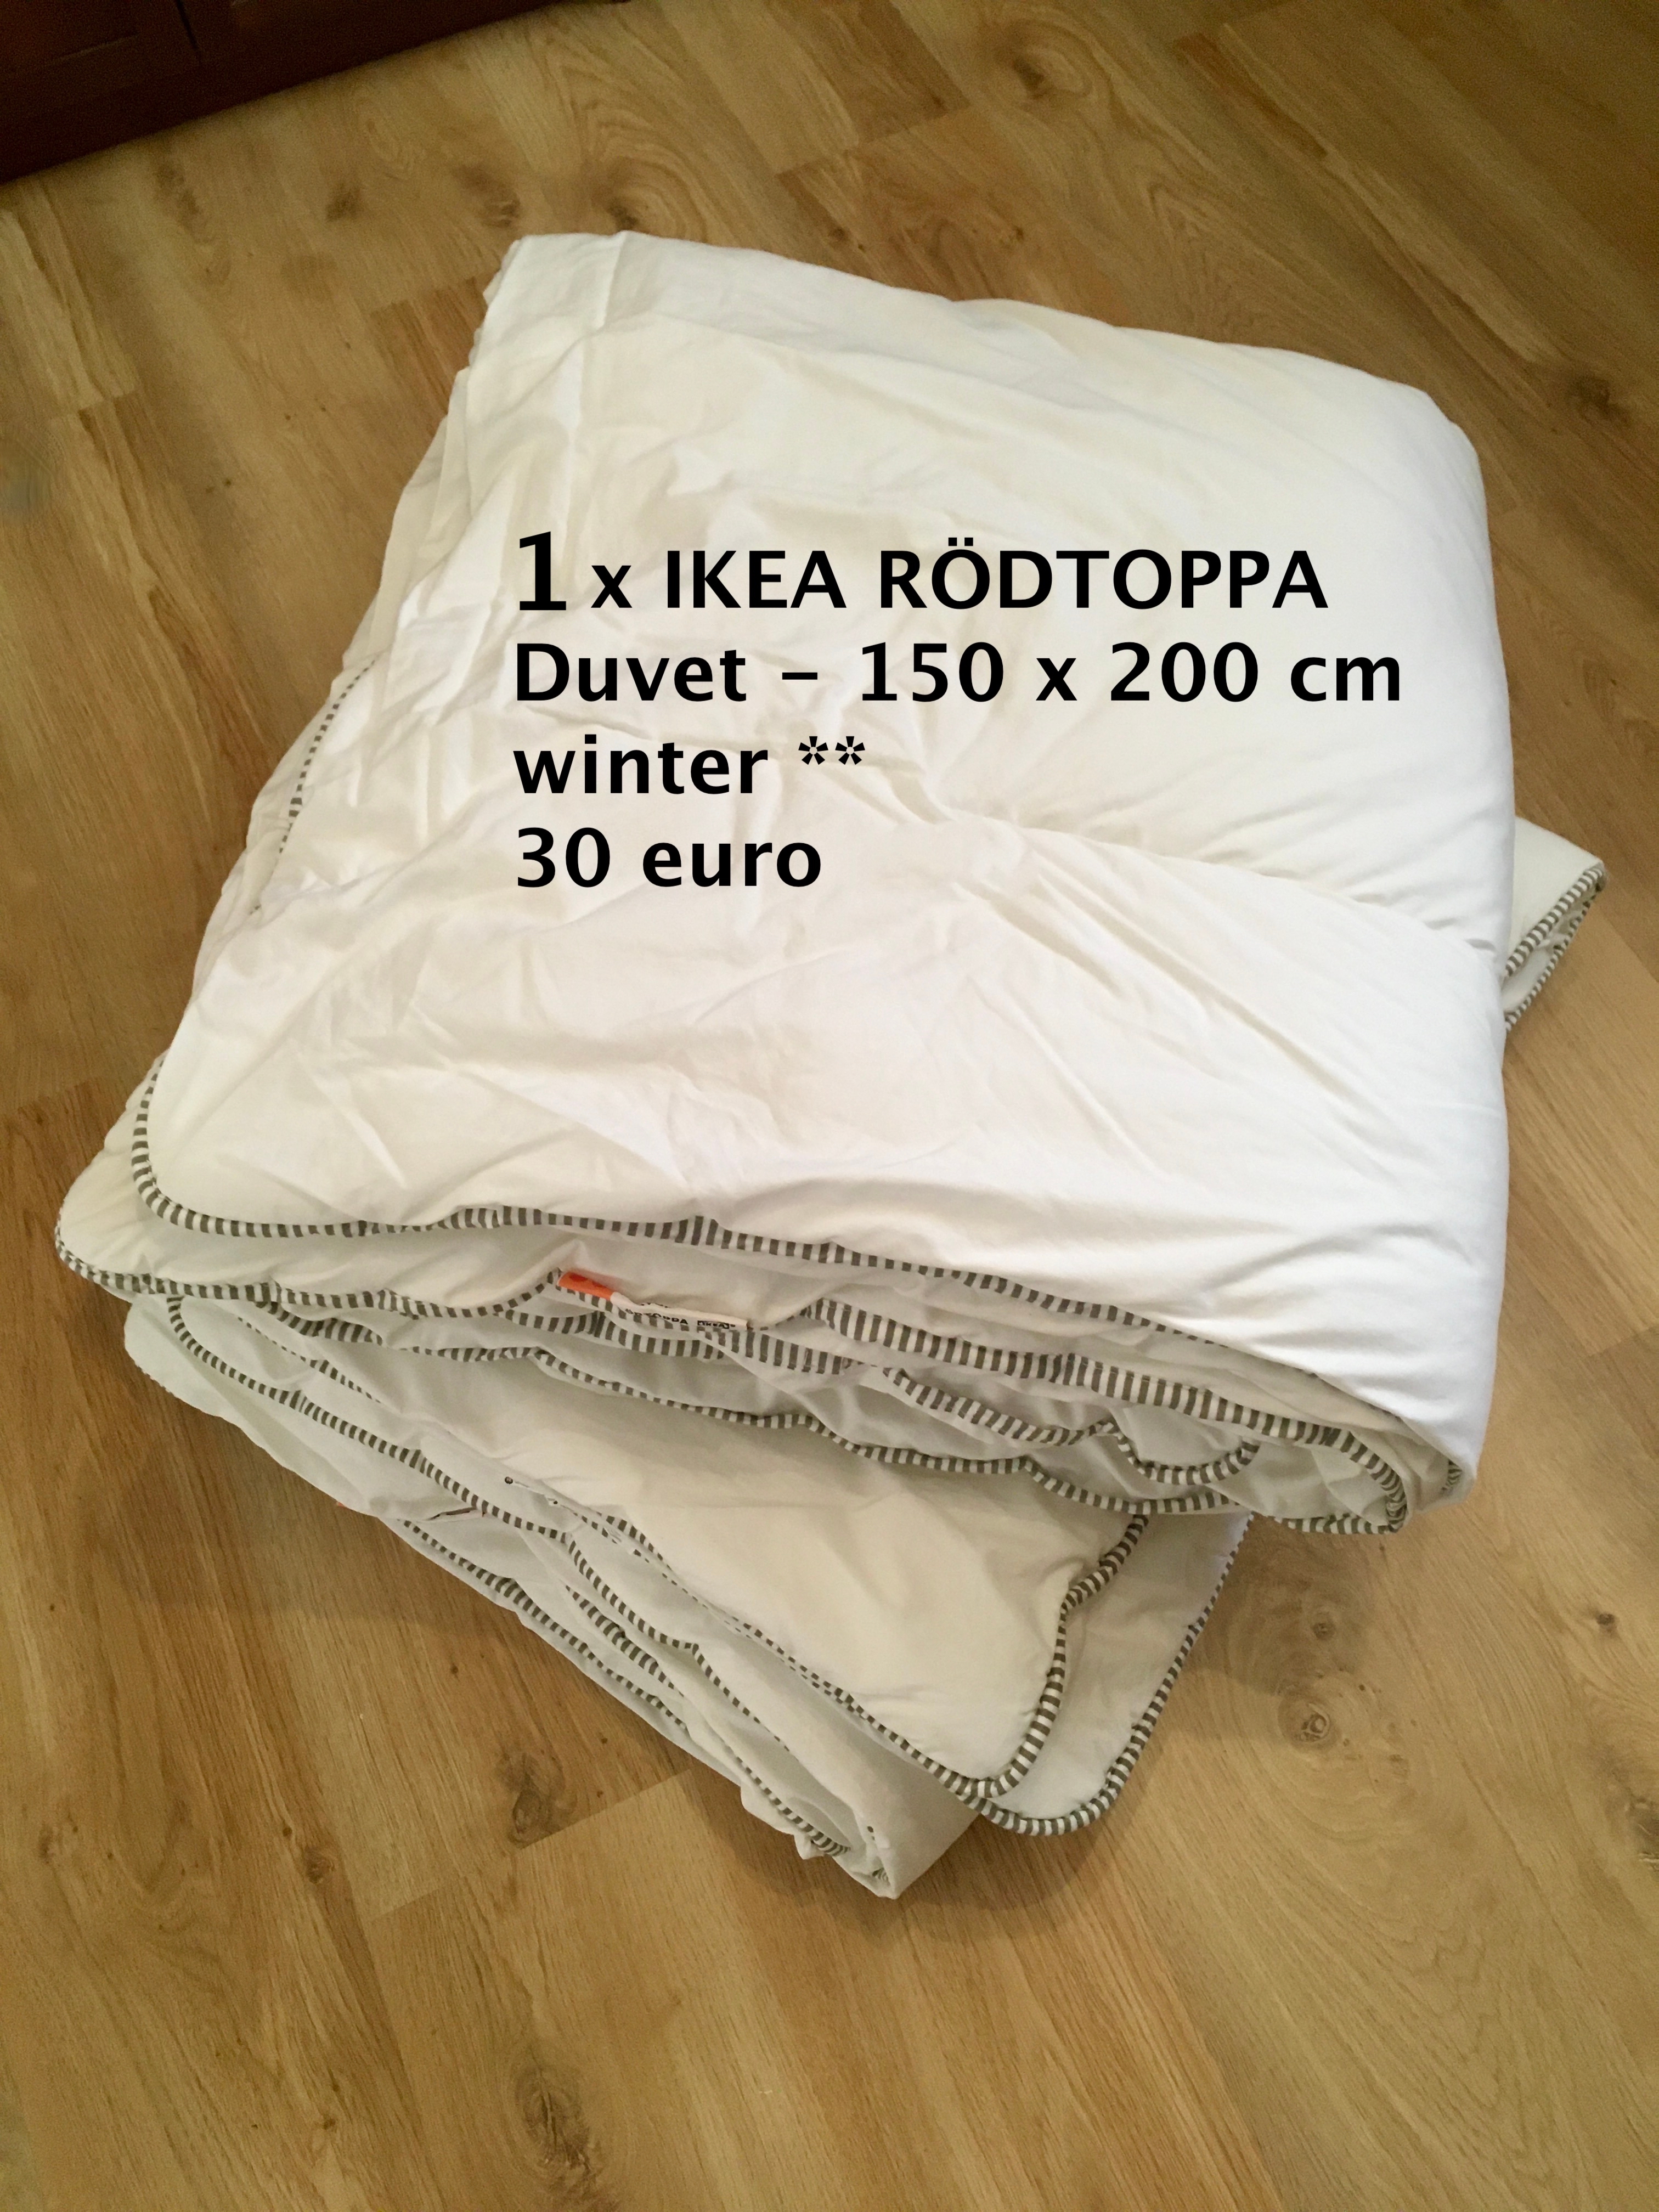 Ikea Rödtoppa 150x200 cm - NCA Portugal